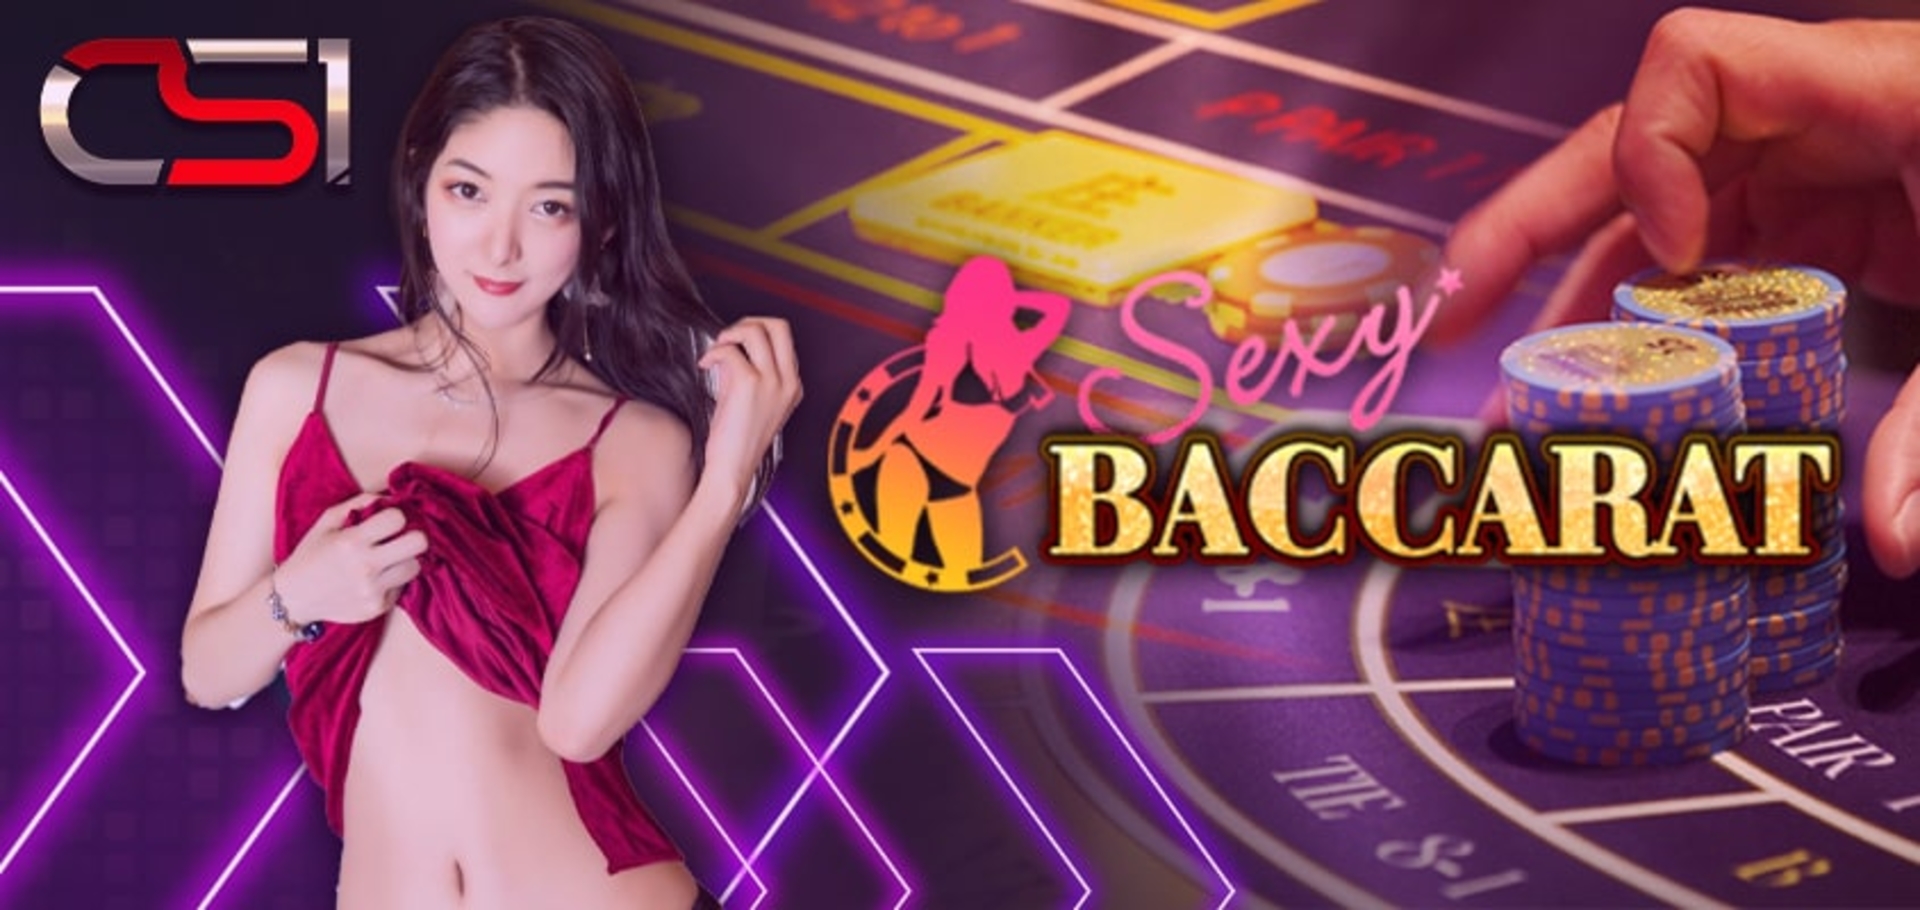 Casino Sexy Baccarat Banner